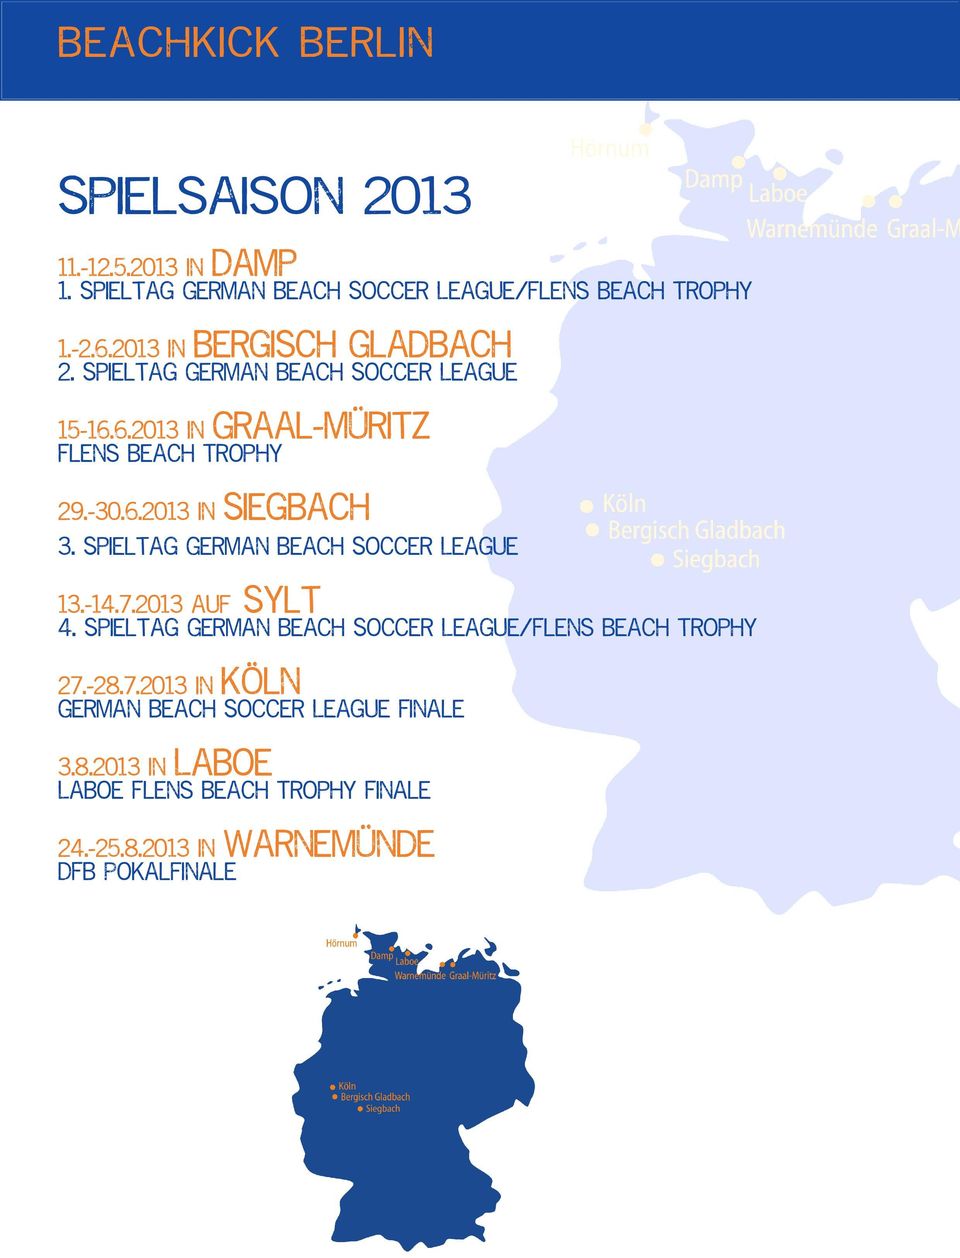 Spieltag German Beach Soccer League 13.-14.7.2013 auf SYlt 4. Spieltag German Beach Soccer League/Flens Beach Trophy 27.-28.7.2013 in Köln German Beach Soccer League Finale 3.